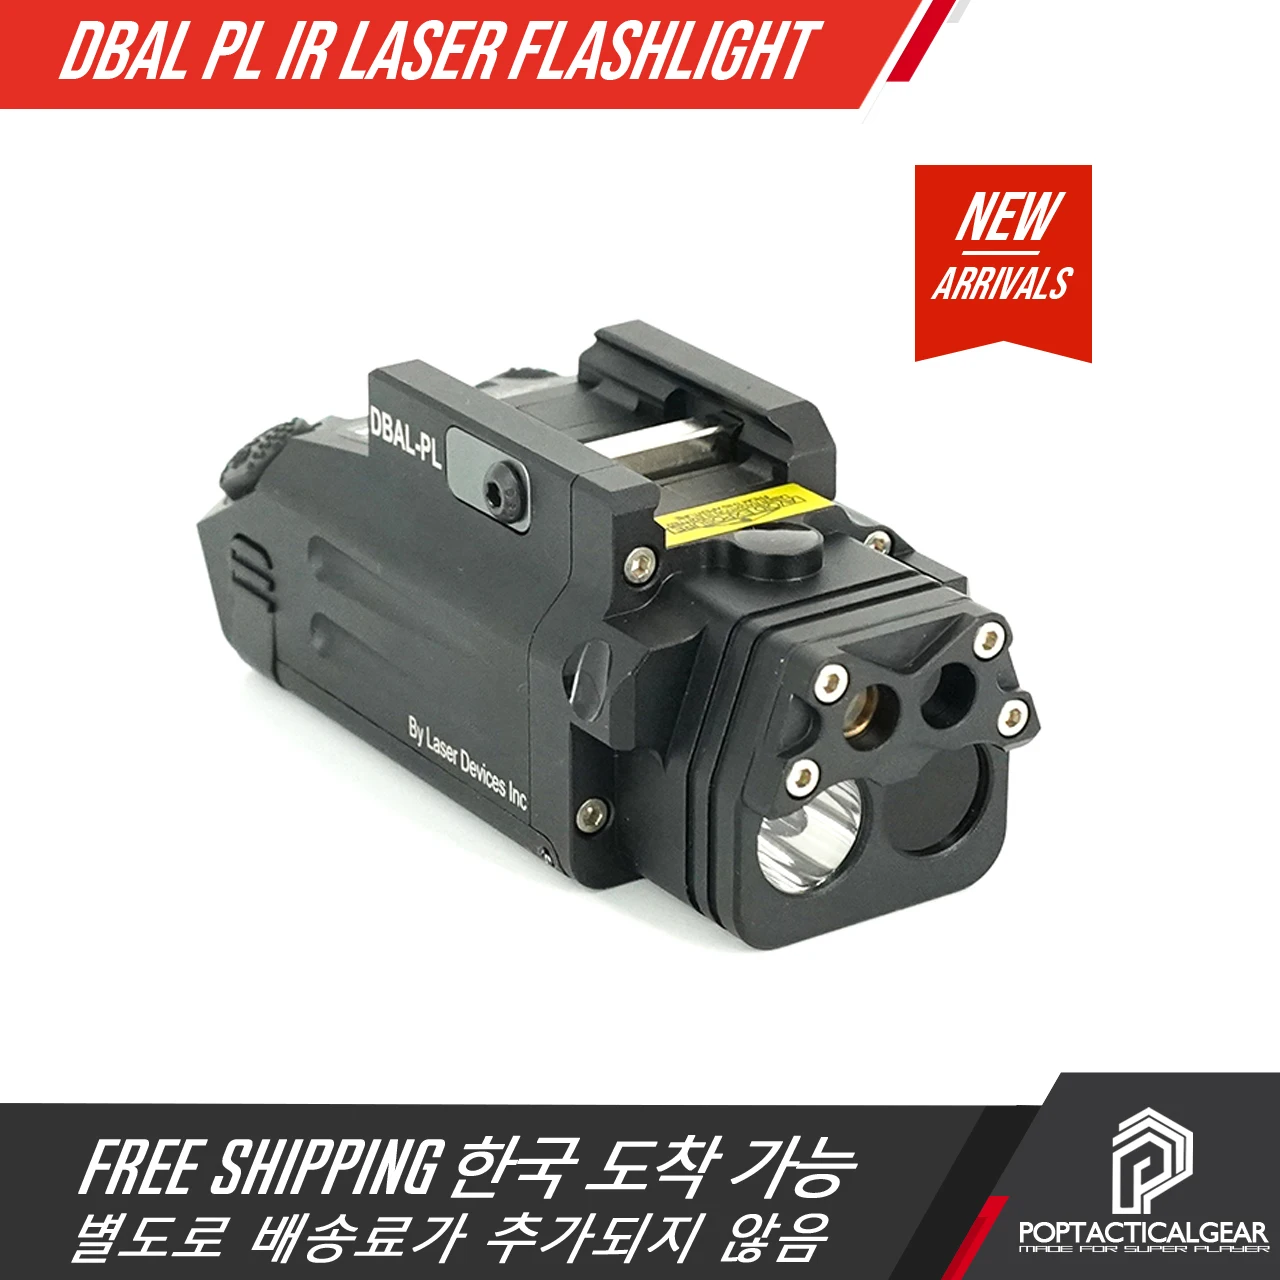 

Sotac DBAL PL SBAL Scout Light LED Flashlight With Red Laser IR Visible Laser Strobe Weapon Light Pistol Gun Accessory